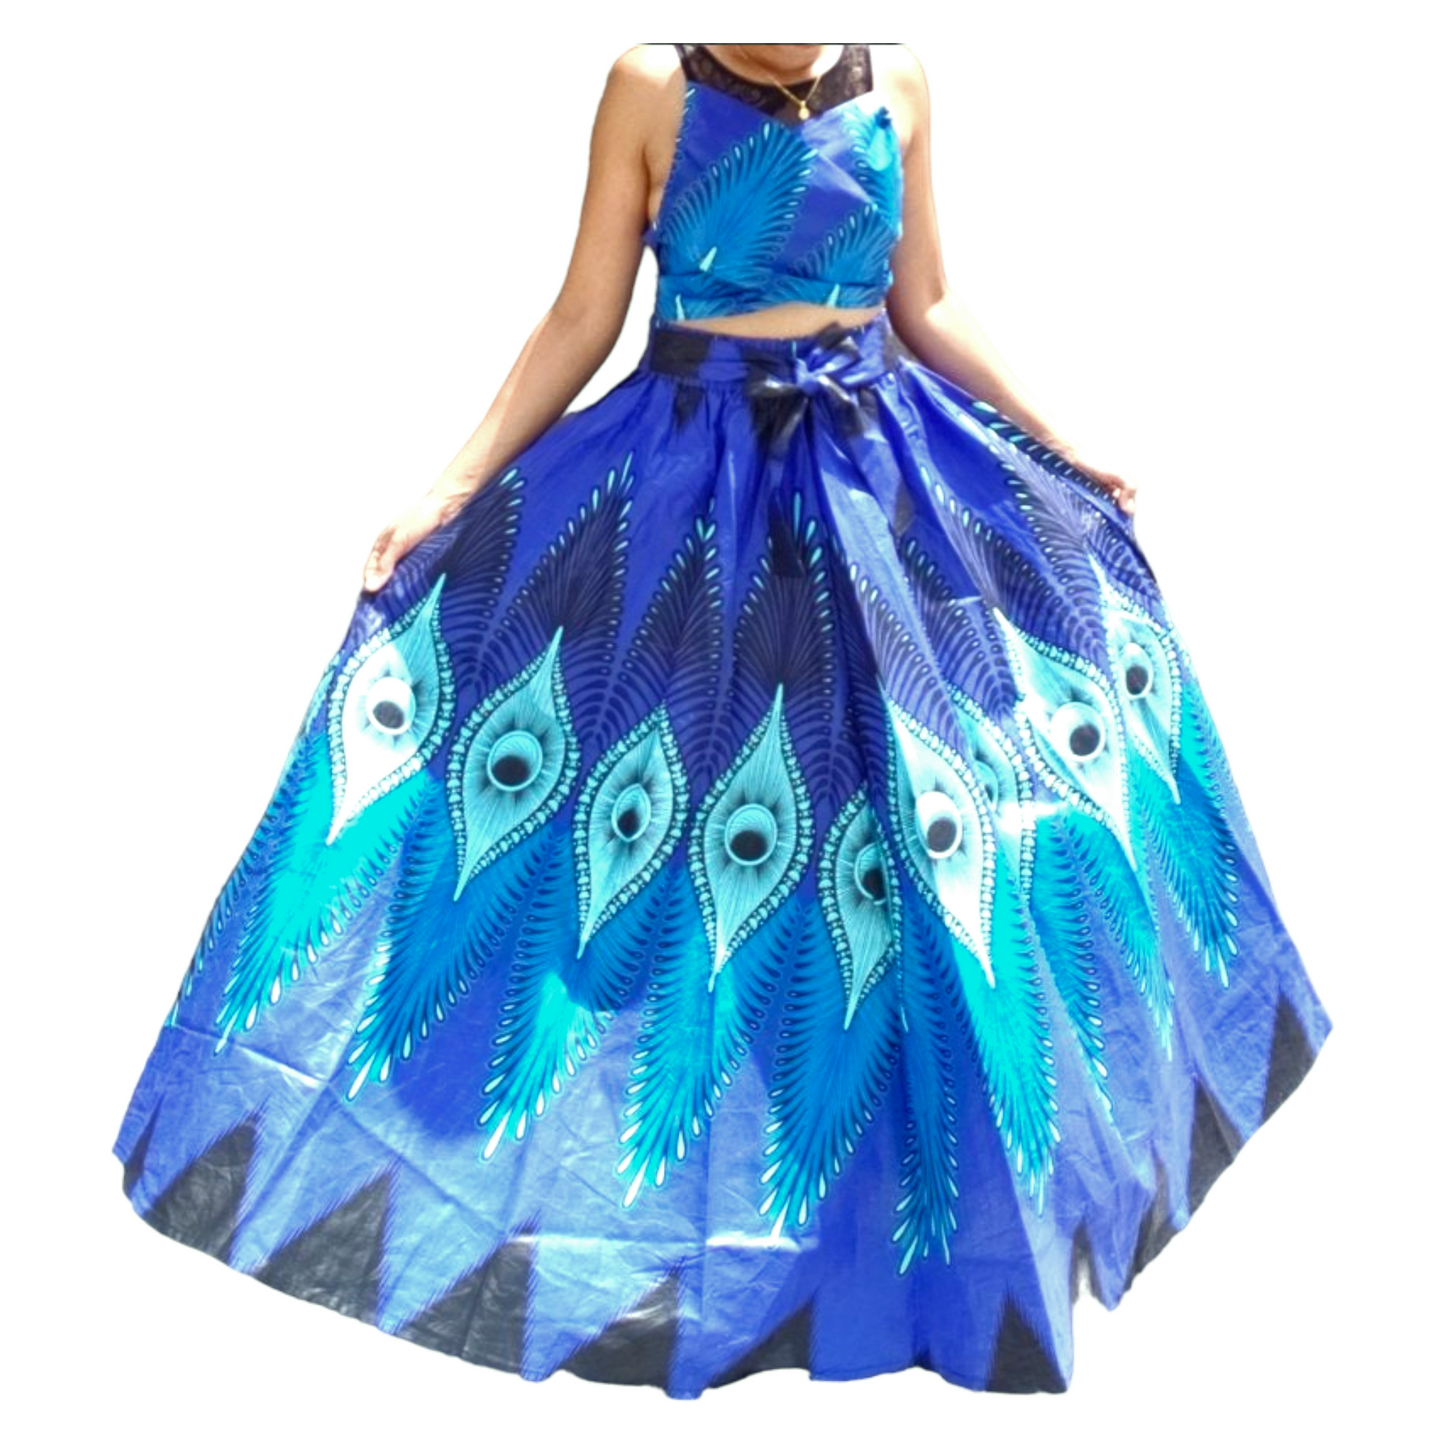 1305- Peacock print long maxi skirt- Blue